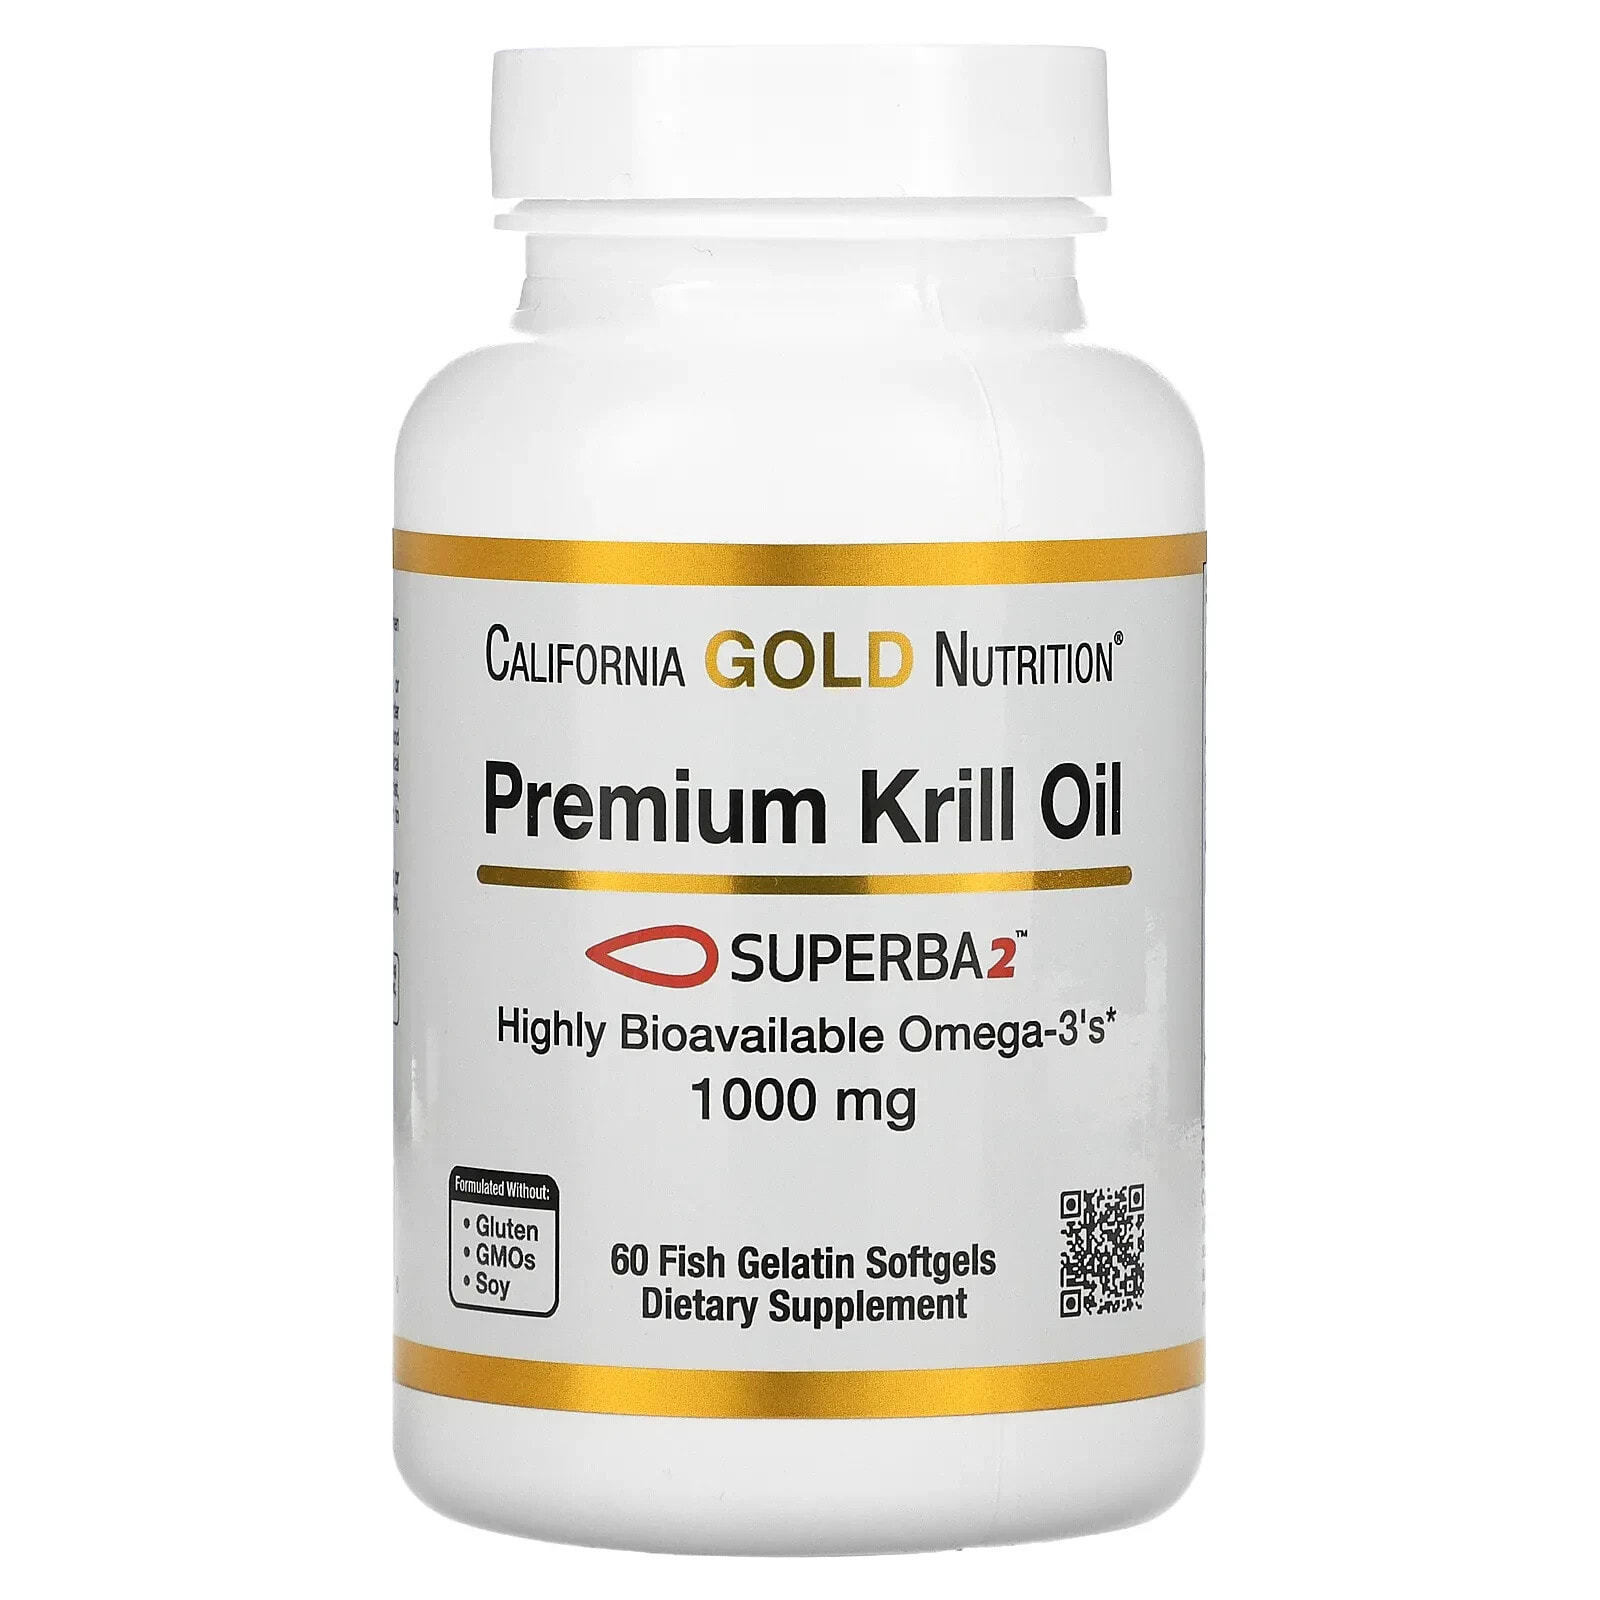 Premium Krill Oil with Superba2, 1,000 mg, 60 Fish Gelatin Softgels